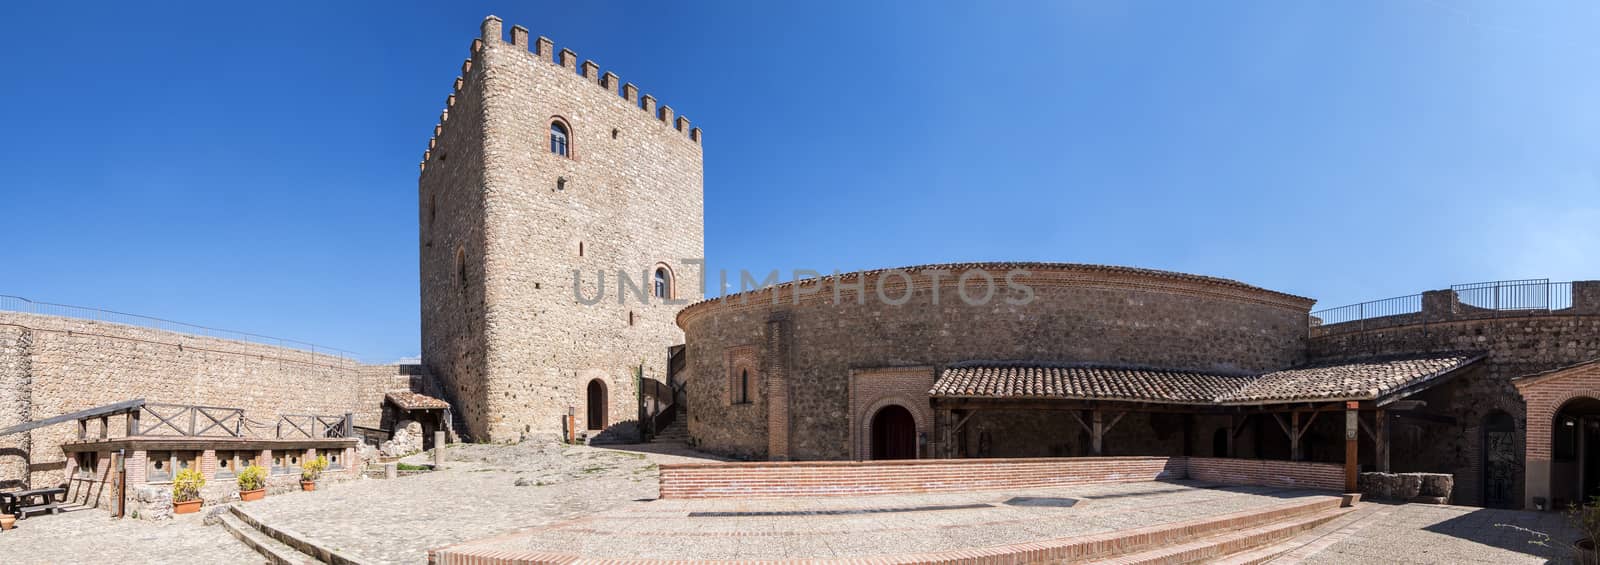 Segura de la Sierra castle, Cazorla and Segura sierra, Jaen, Spain